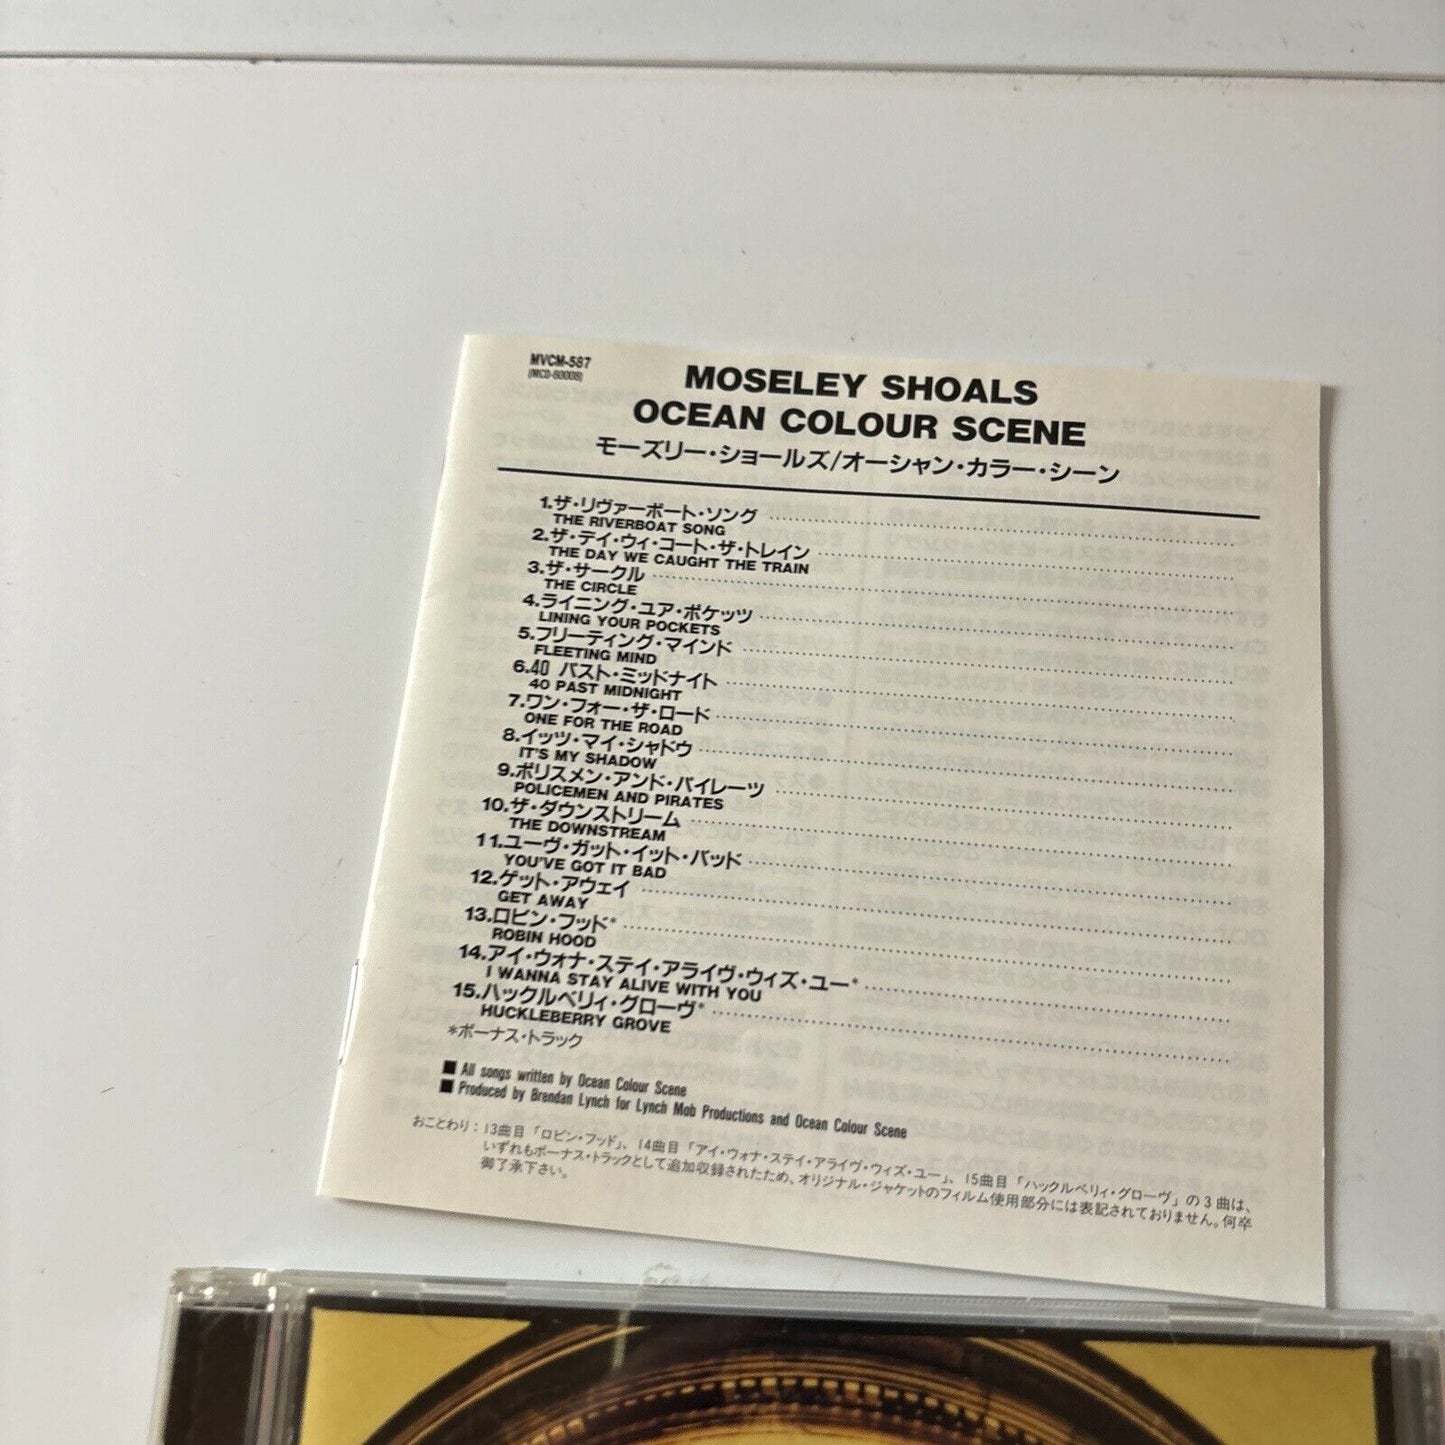 Ocean Colour Scene - Moseley Shoals (CD, 1996) Japan Mvcm-587